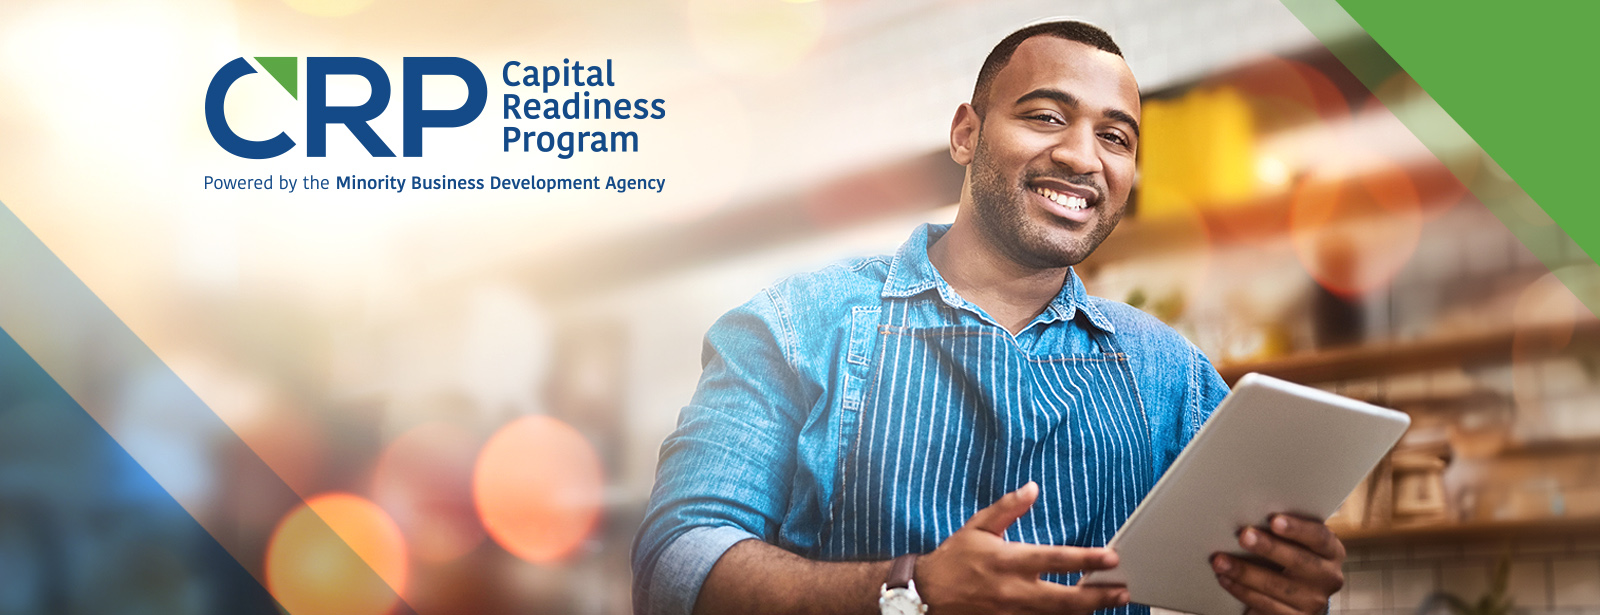 Capital Readiness Program Web Banner